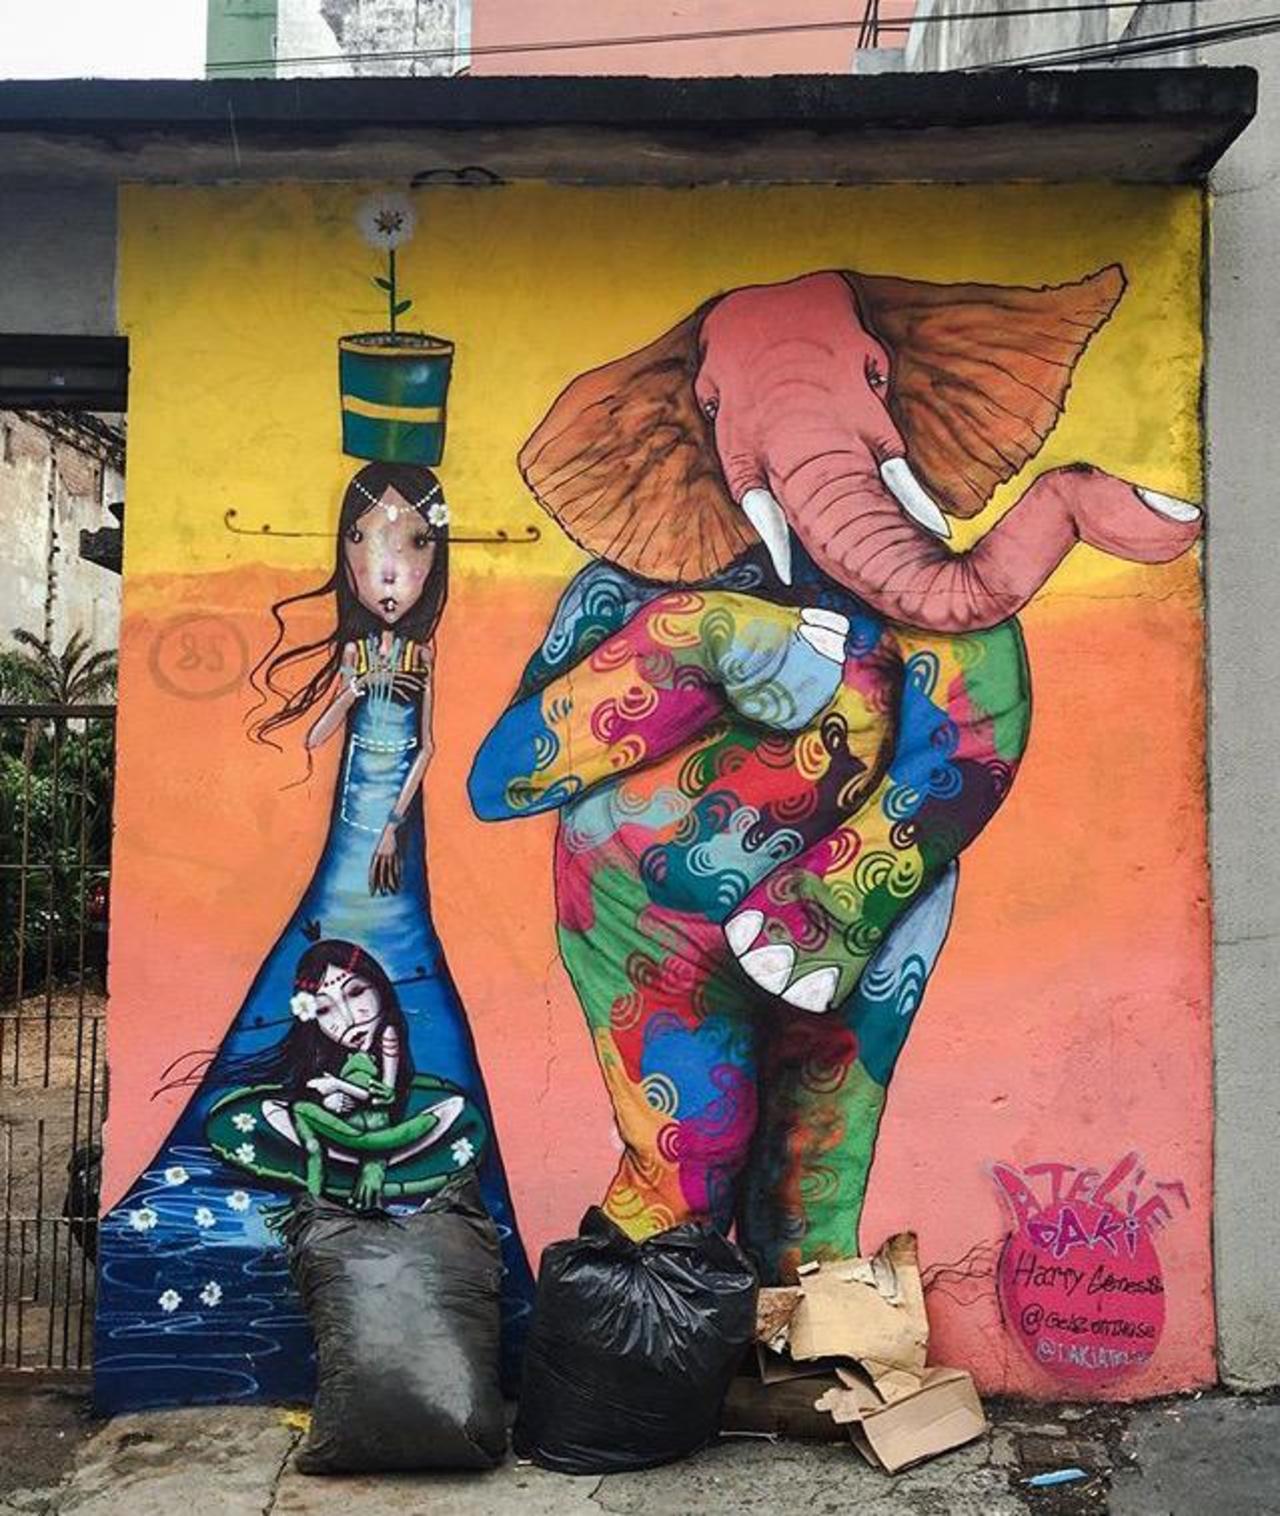 Street Art by Harry Geneis & Gelson in São Paulo #art #mural #graffiti #streetart http://t.co/SlLbhuMZfD … … … … http://twitter.com/charlesjackso14/status/648021462331334656